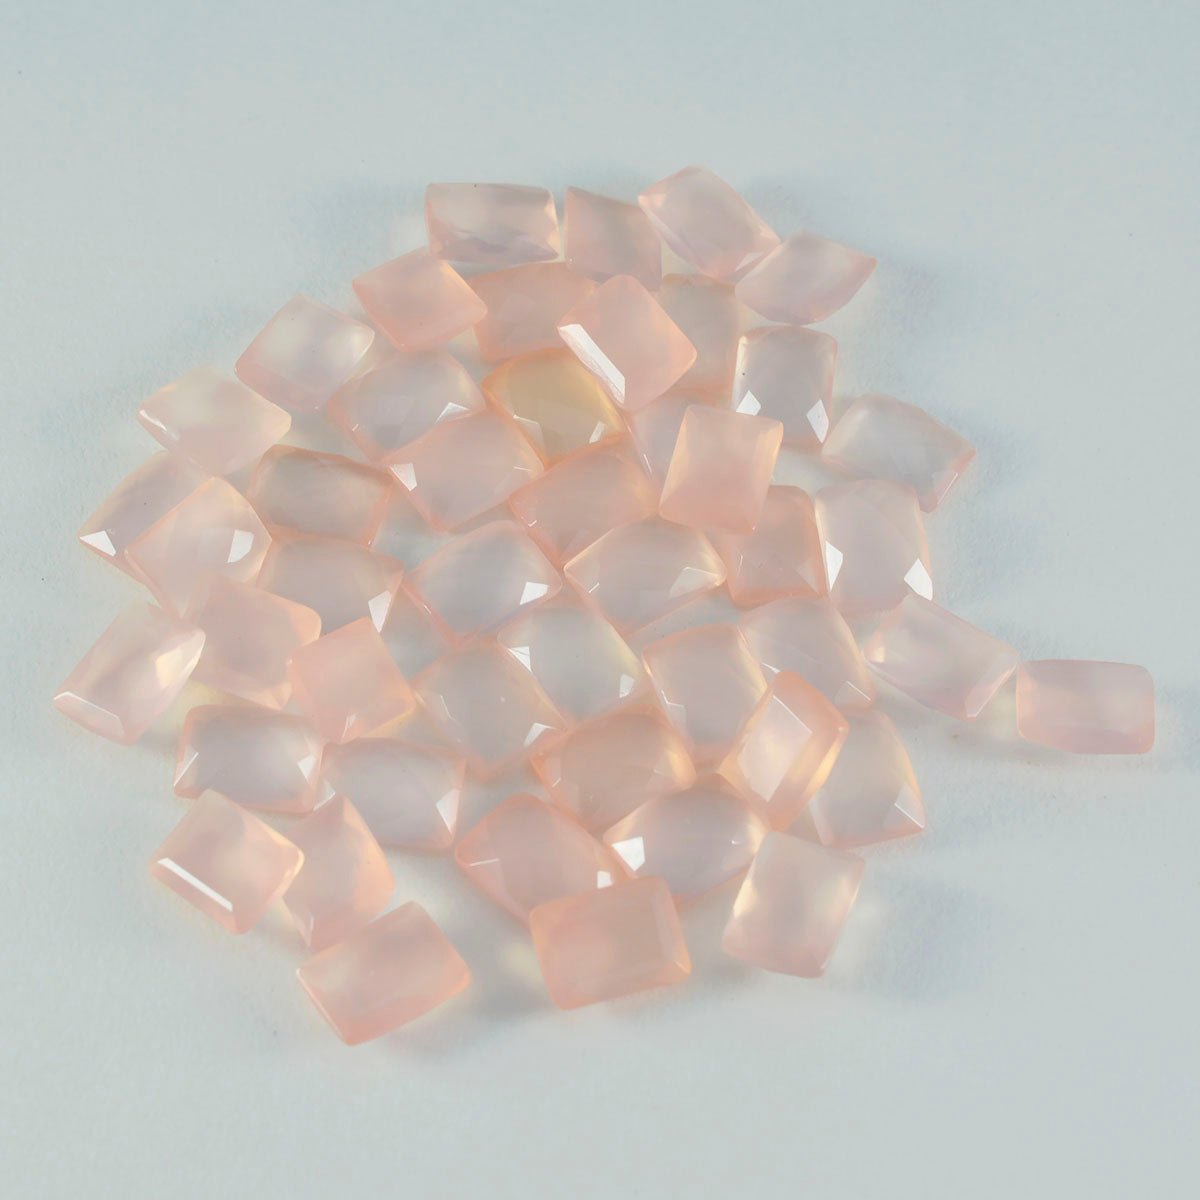 Riyogems 1PC Pink Rose Quartz Faceted 4x6 mm Octagon Shape sweet Quality Loose Gem